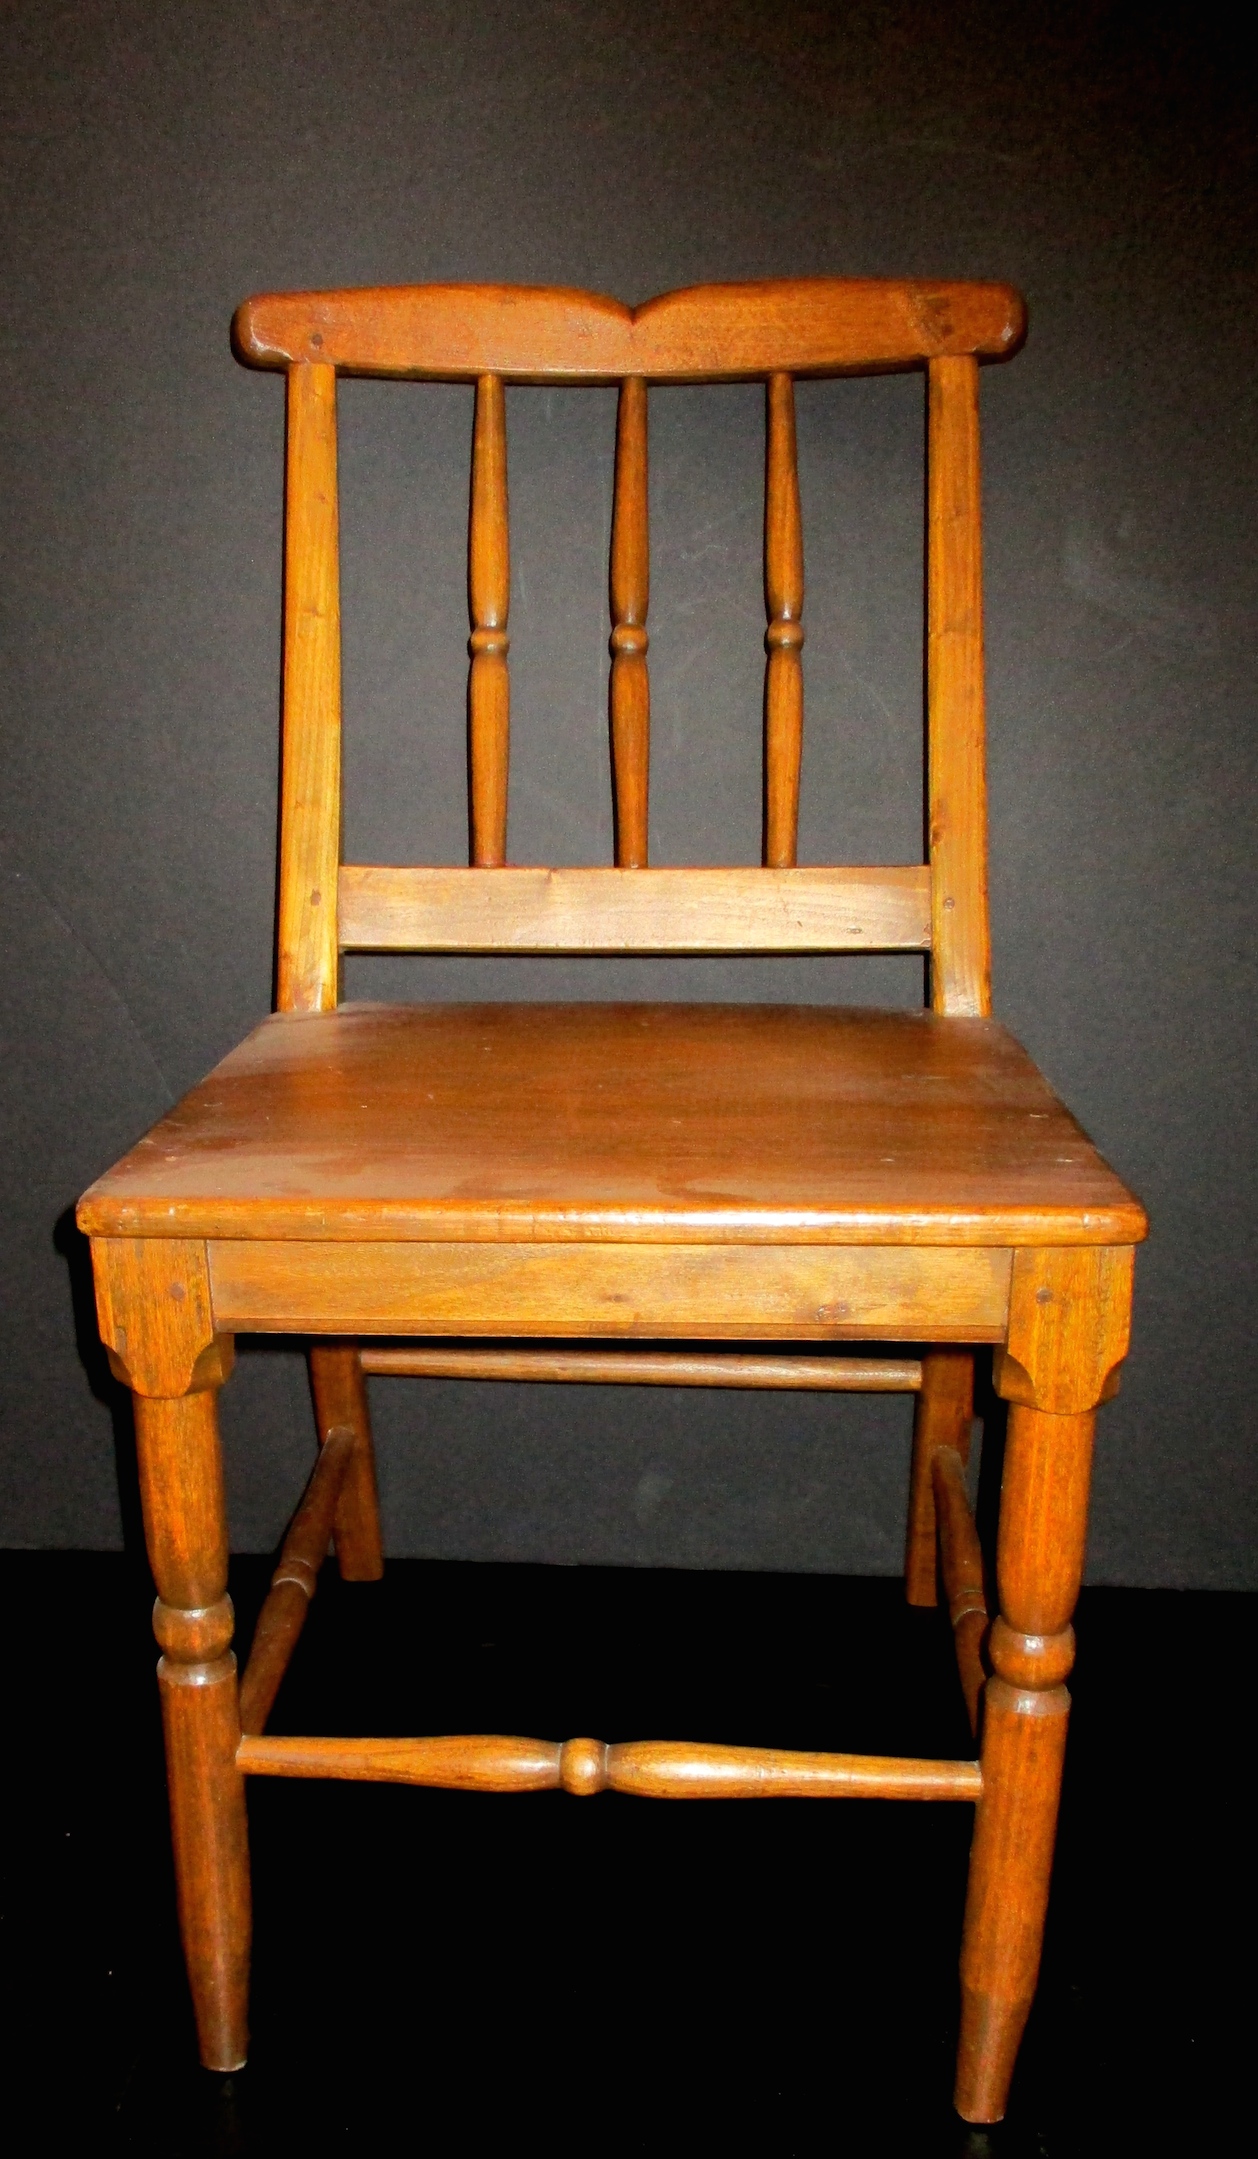 One of 3 Hand-made Scandinavian Chairs